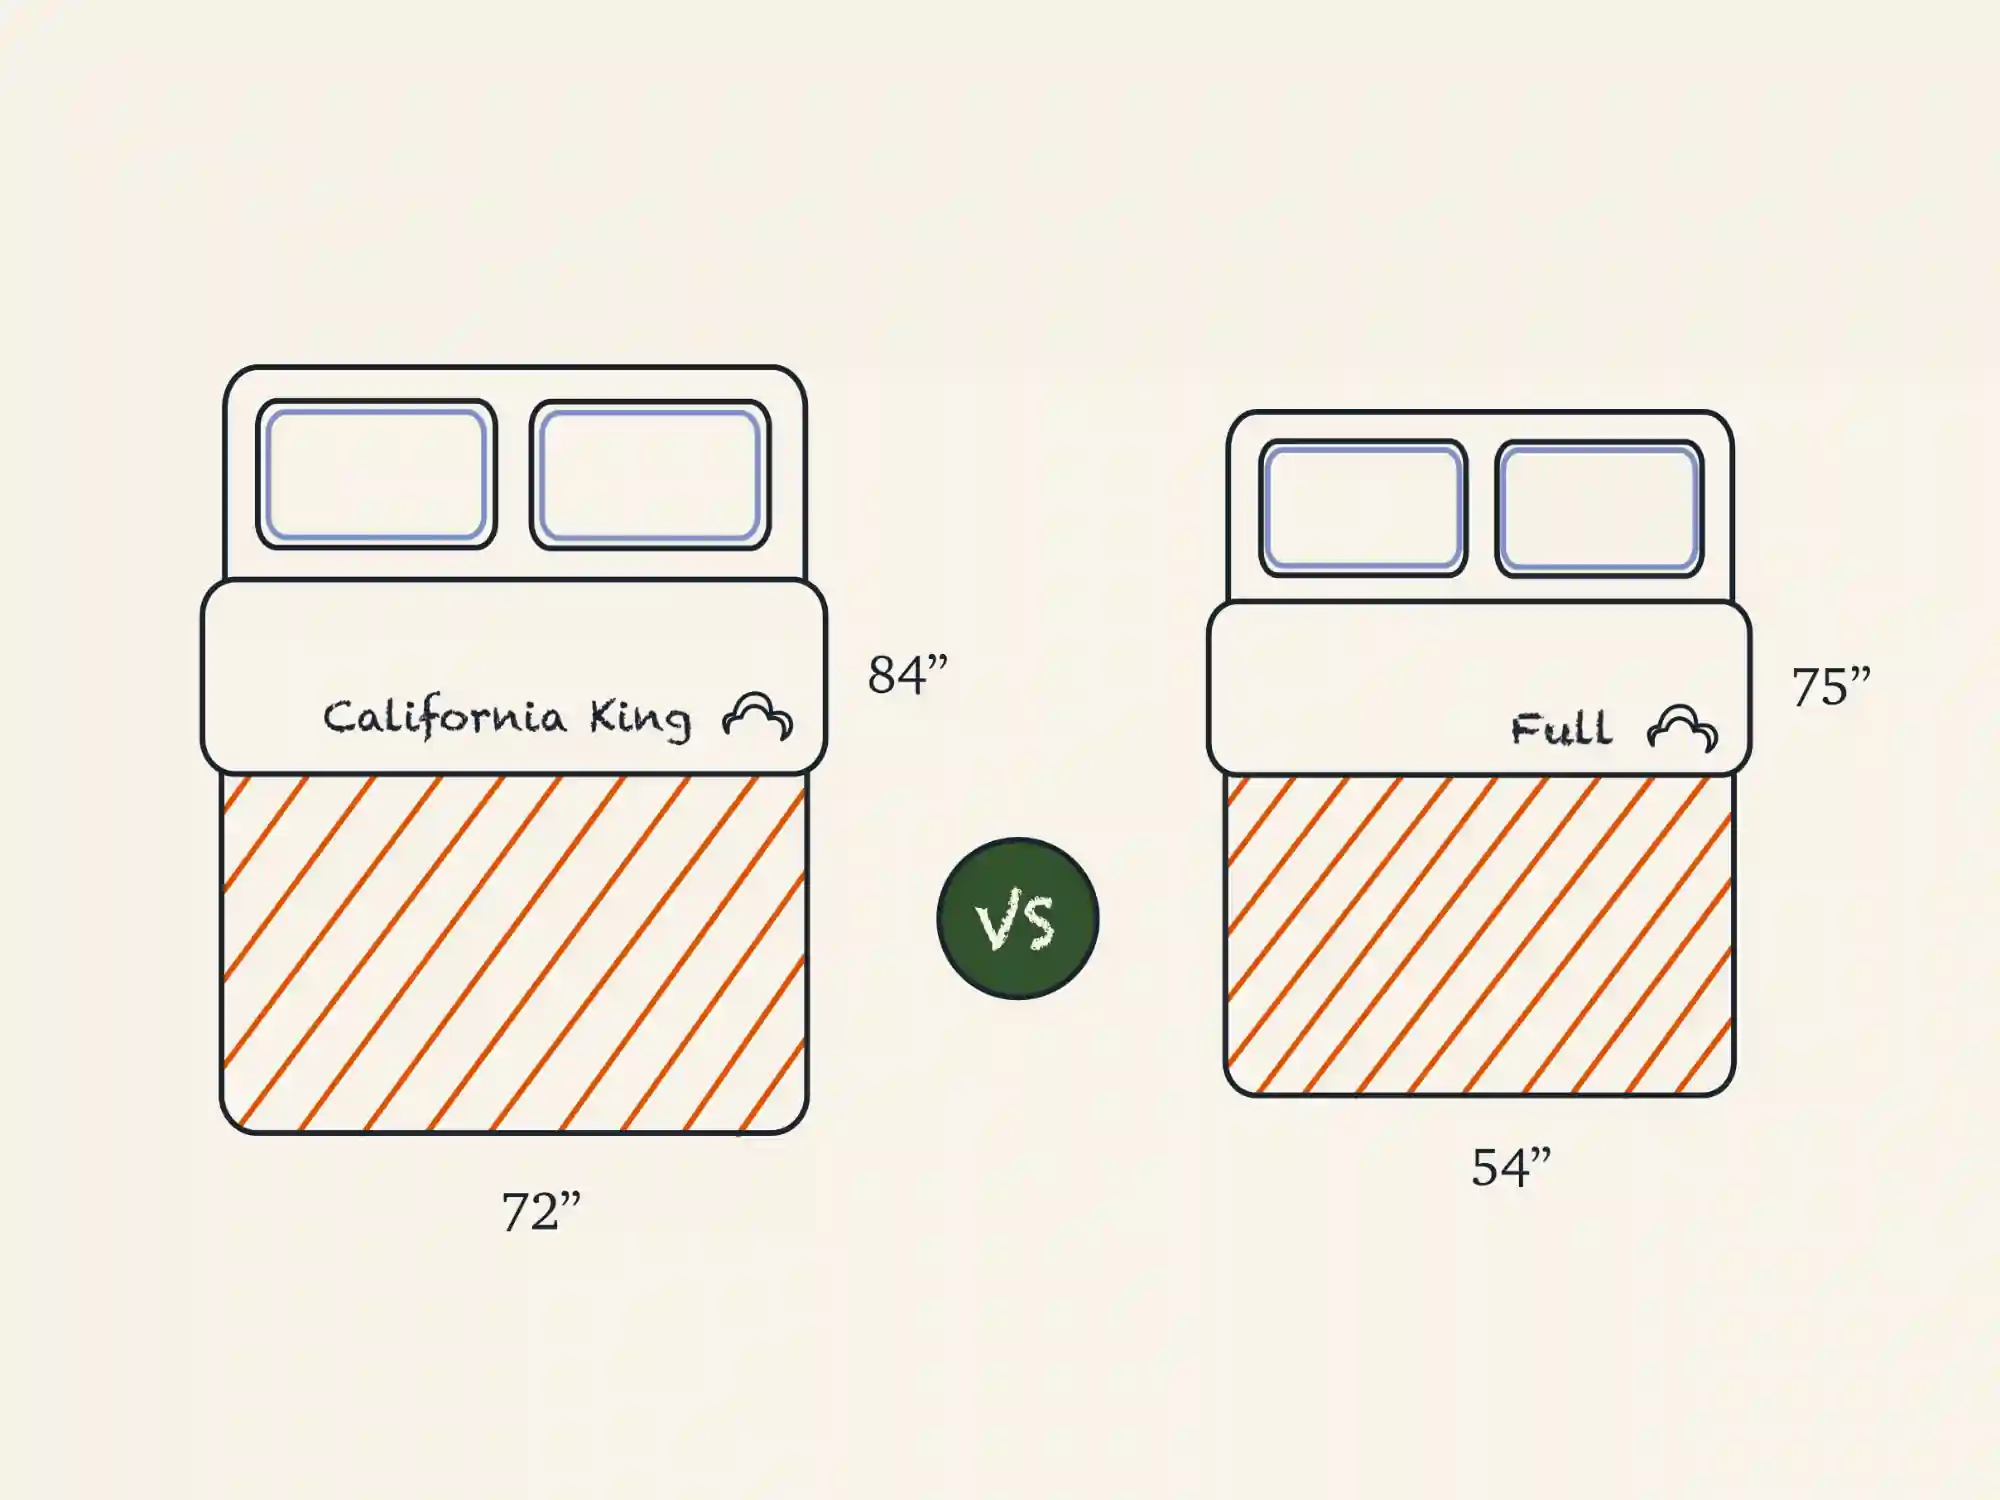 california king vs full mattress comparison illustration